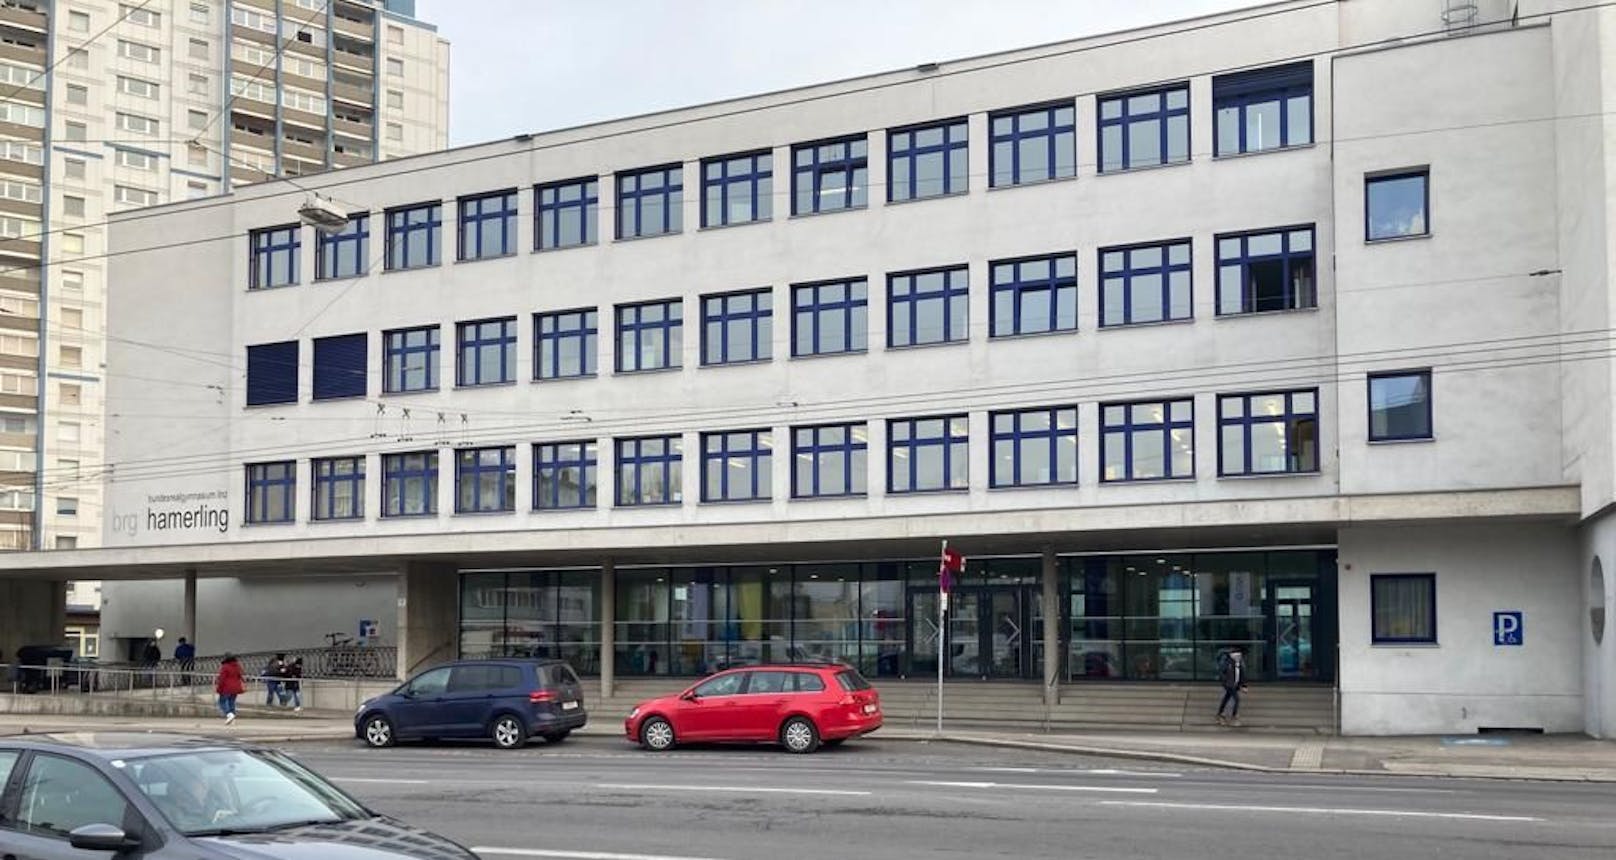 An der Hamerlingschule in Linz wird am heutigen Dienstag gestreikt.